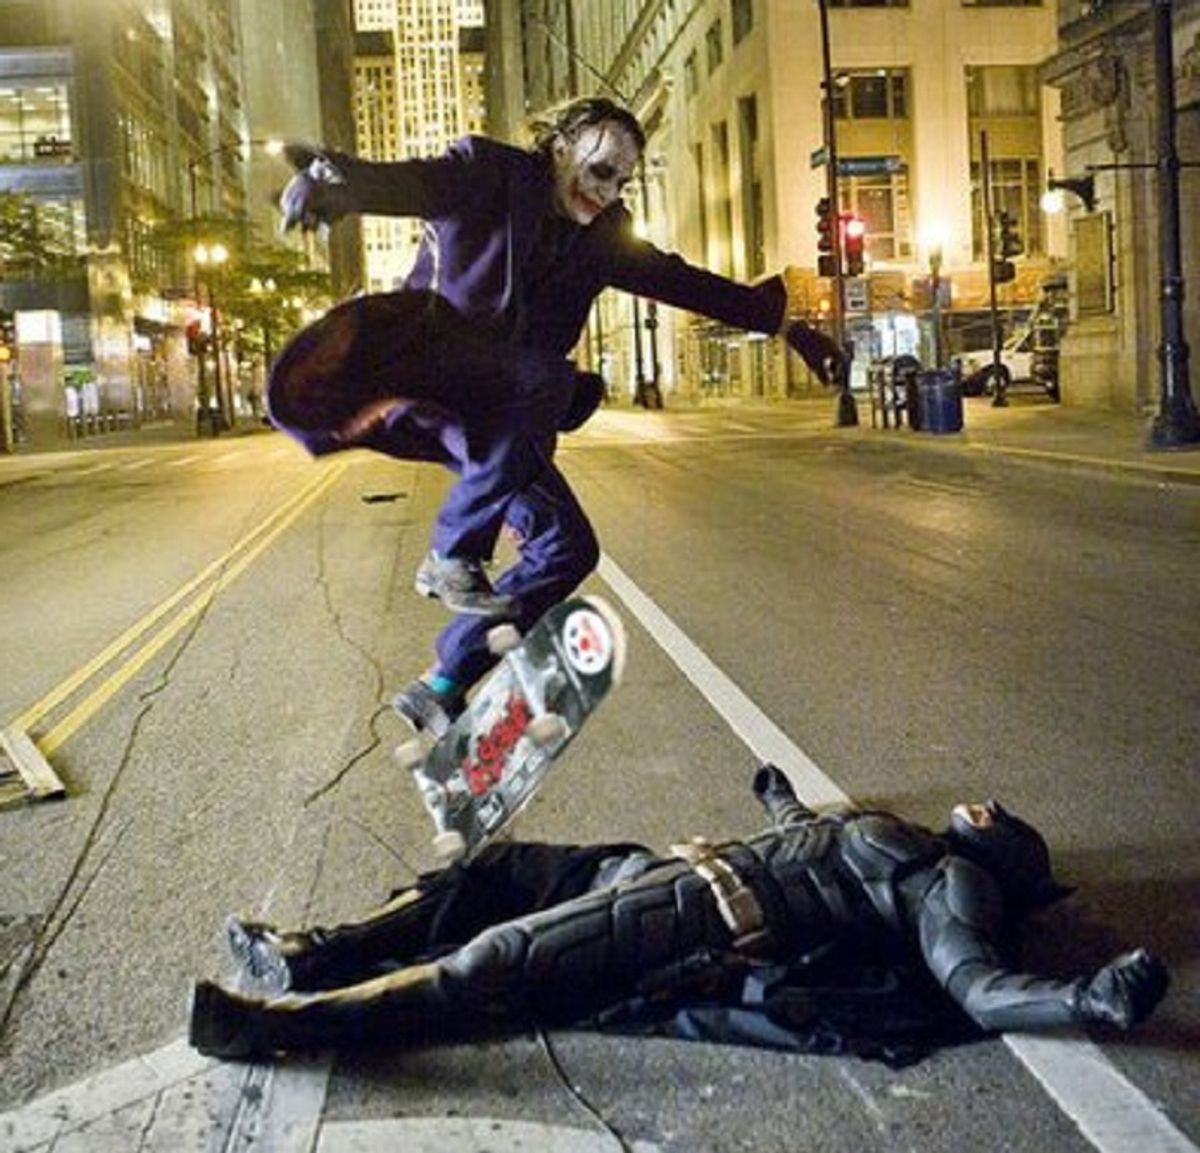 Does This Image Show Heath Ledger's Joker Doing a Skateboard Kickflip Over  Batman? 